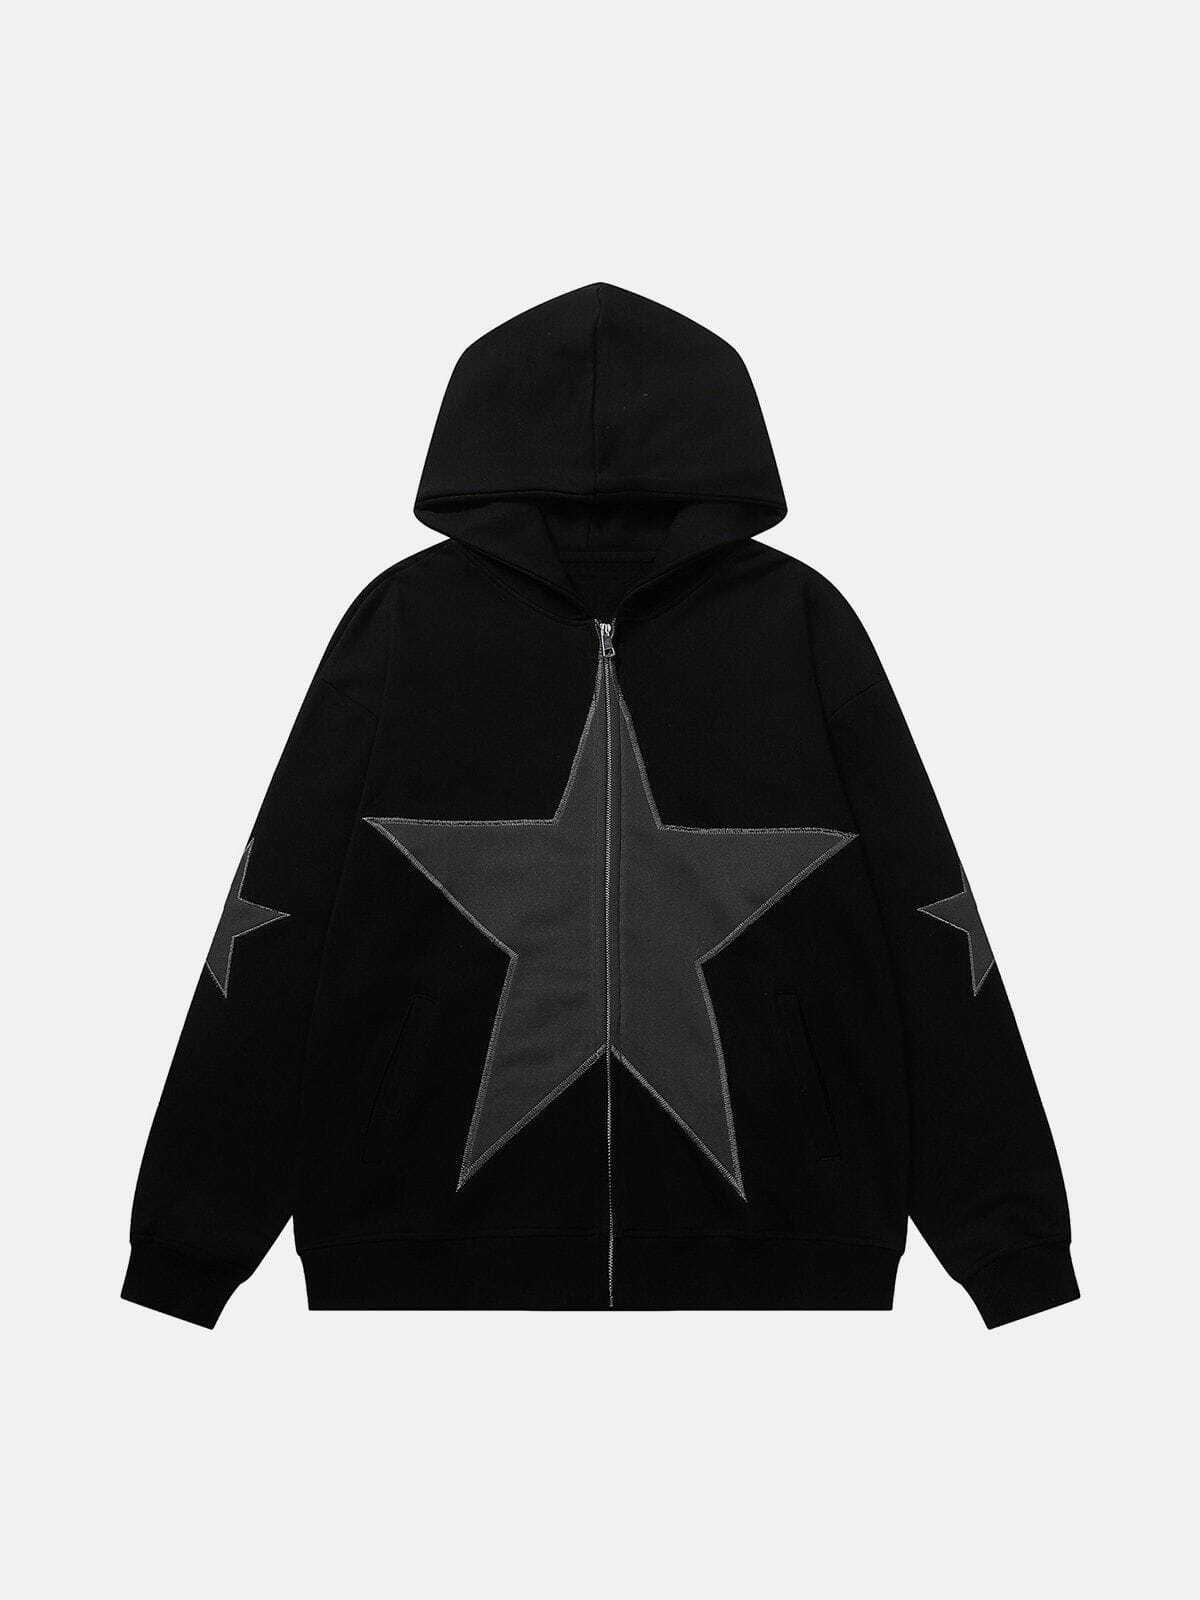 dynamic star graphic hoodie edgy streetwear 2296